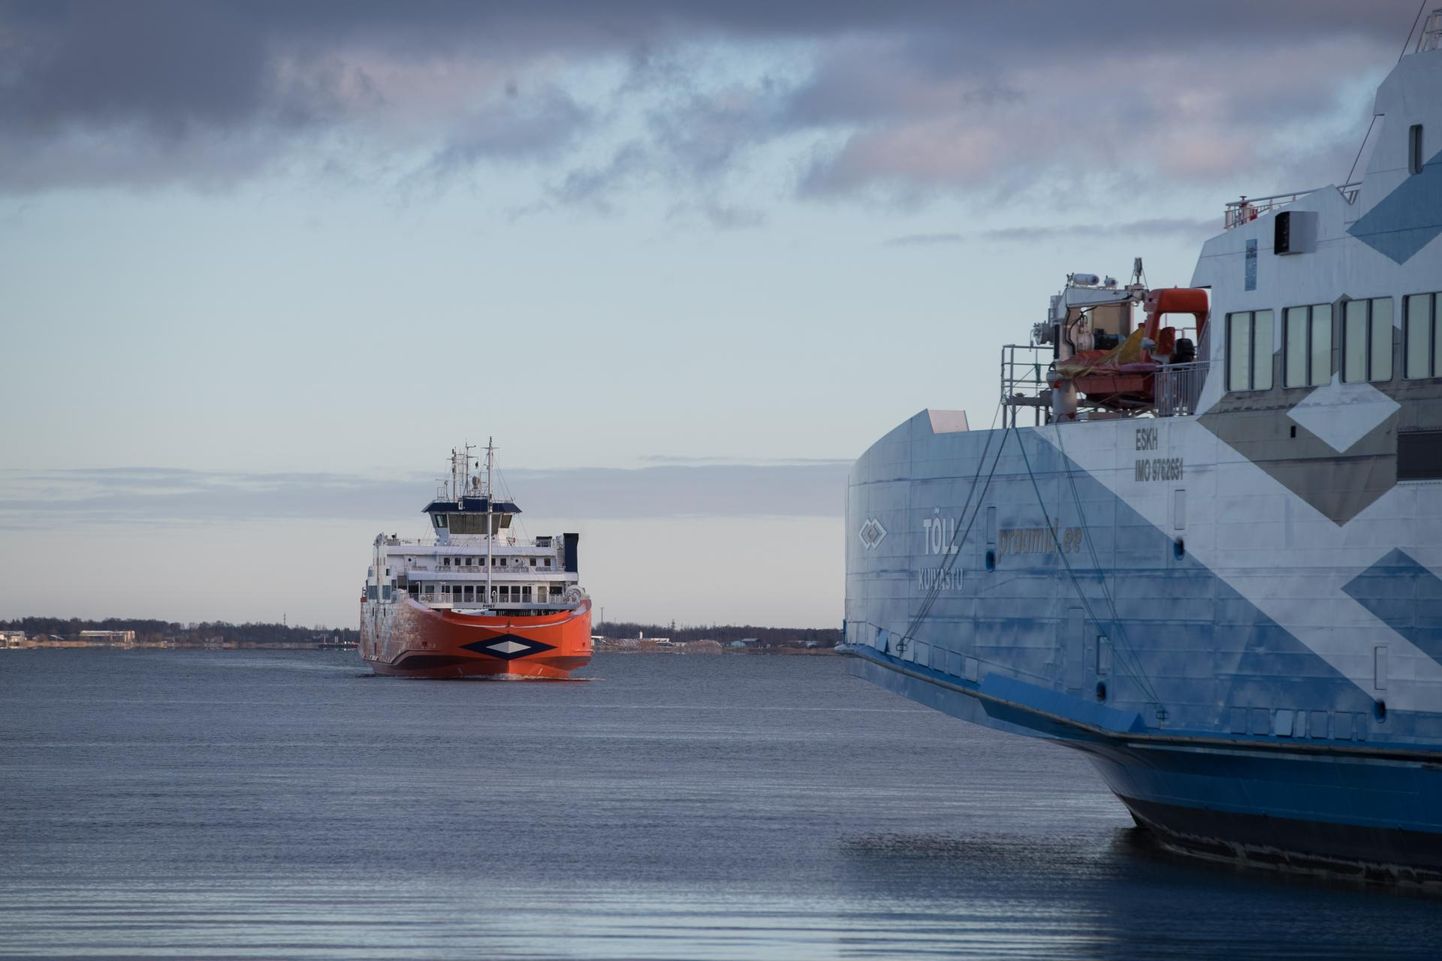 Ferries Tõll and Piret.